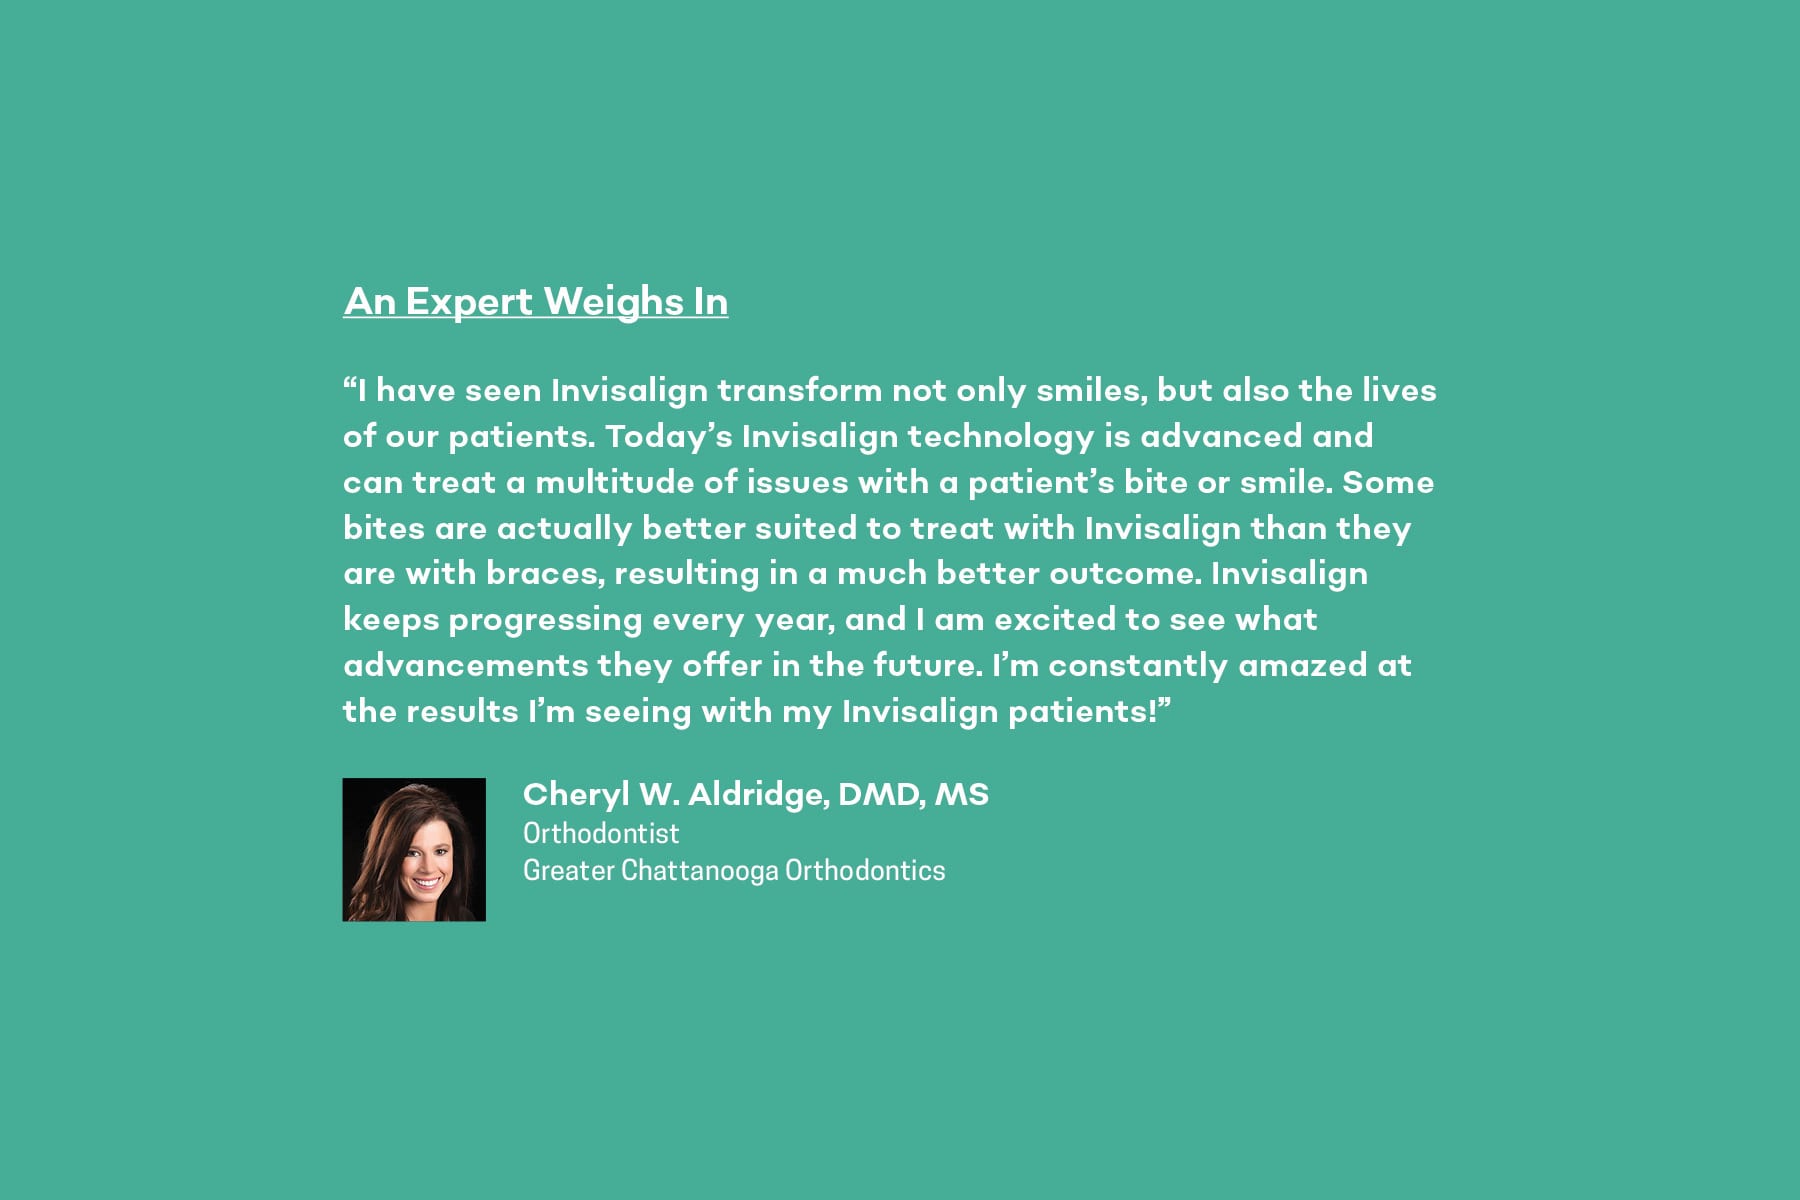 Dr. Cheryl W. Aldridge shares her expert opinion on invisalign